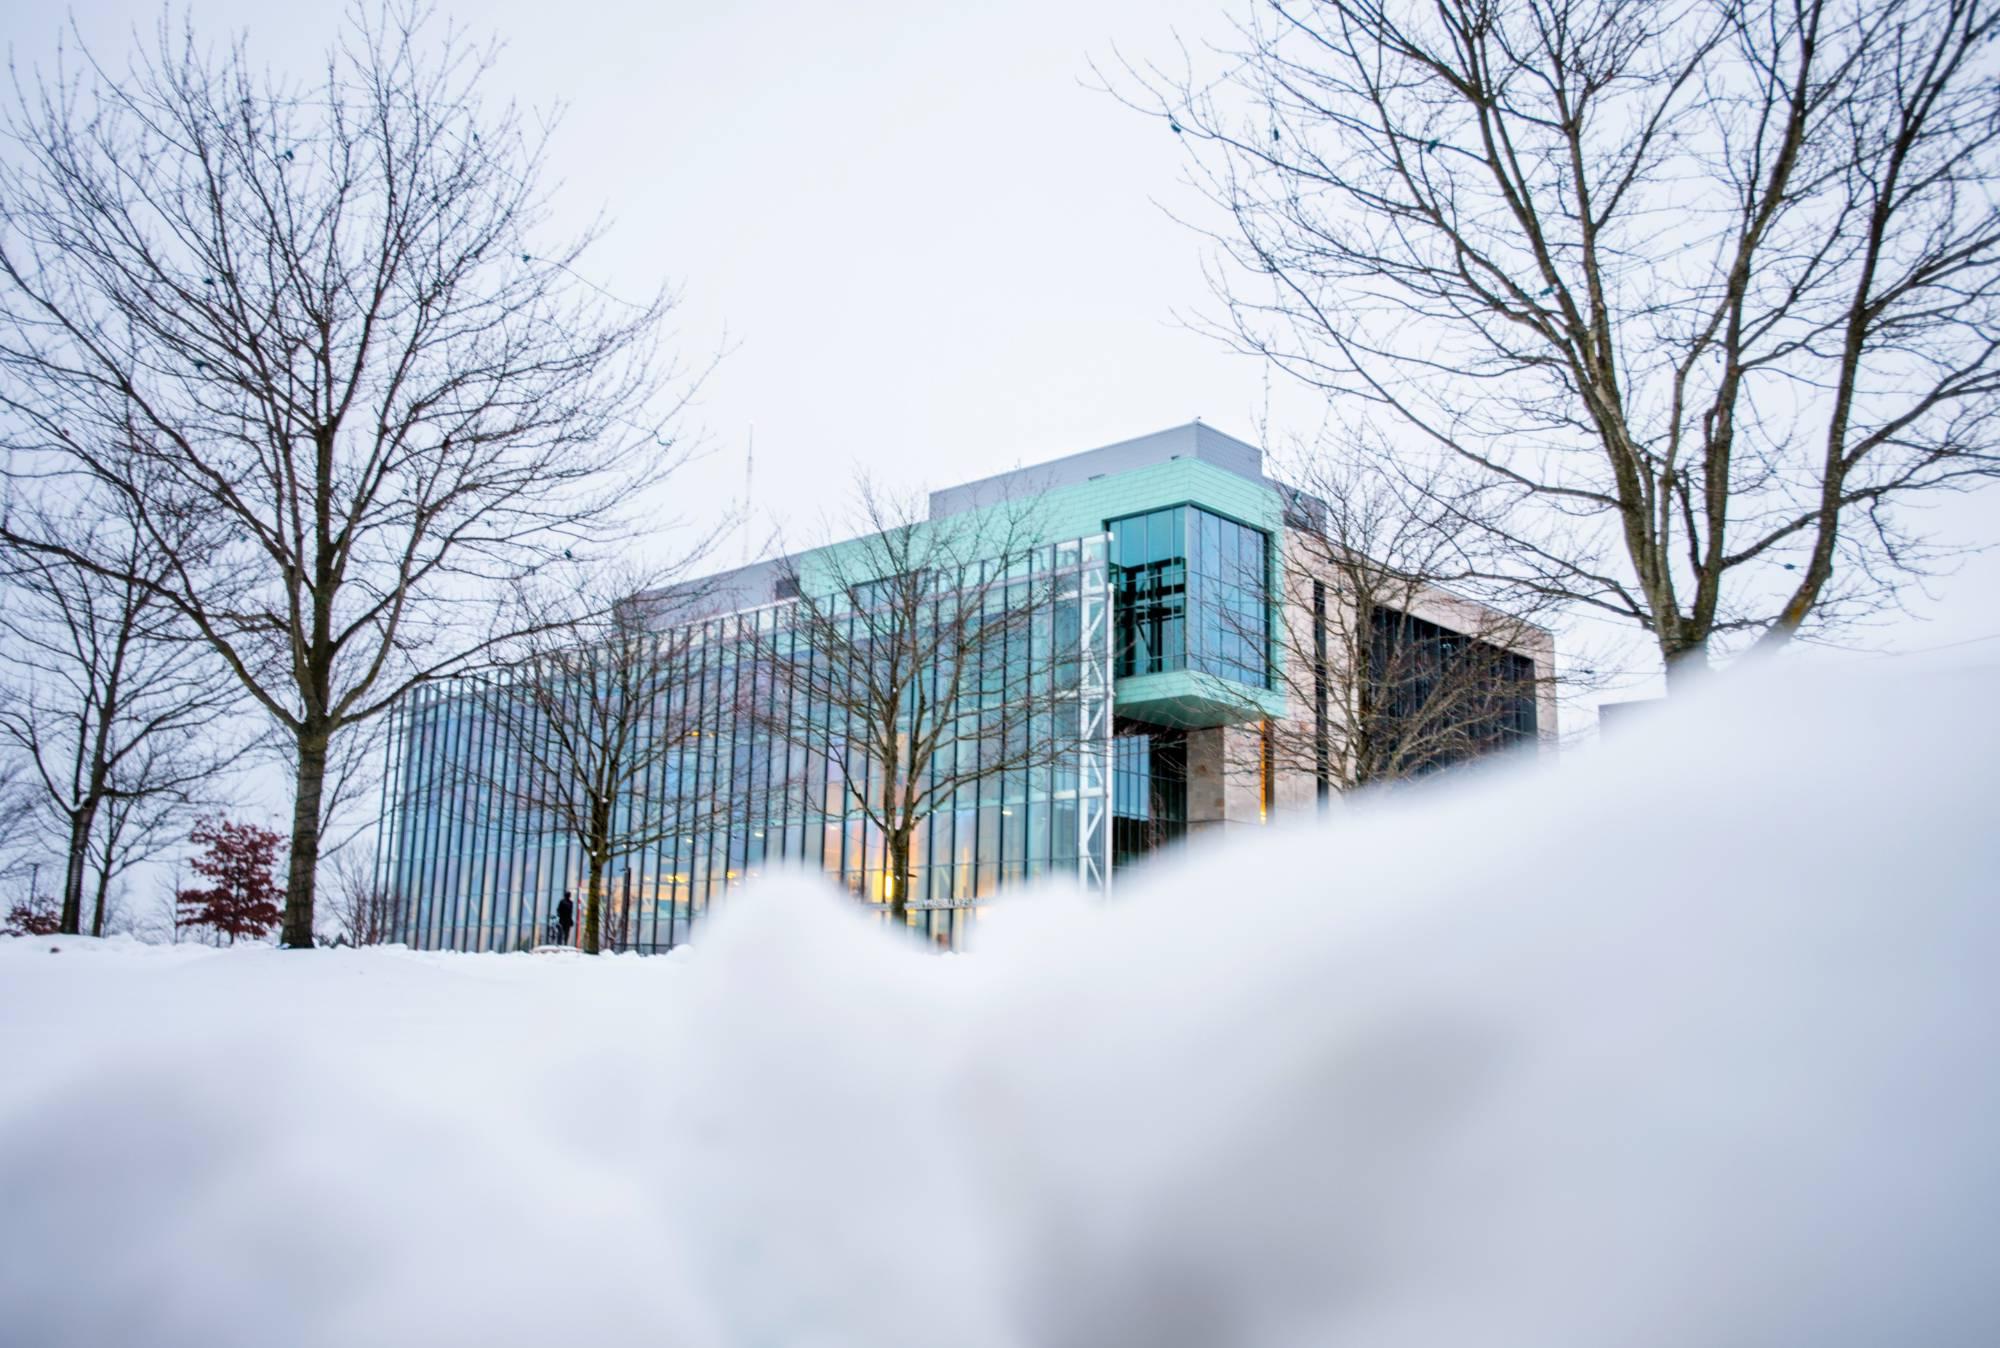 GVSU Allendale校区的玛丽·艾德玛·皮尤图书馆，冬天，地上有雪